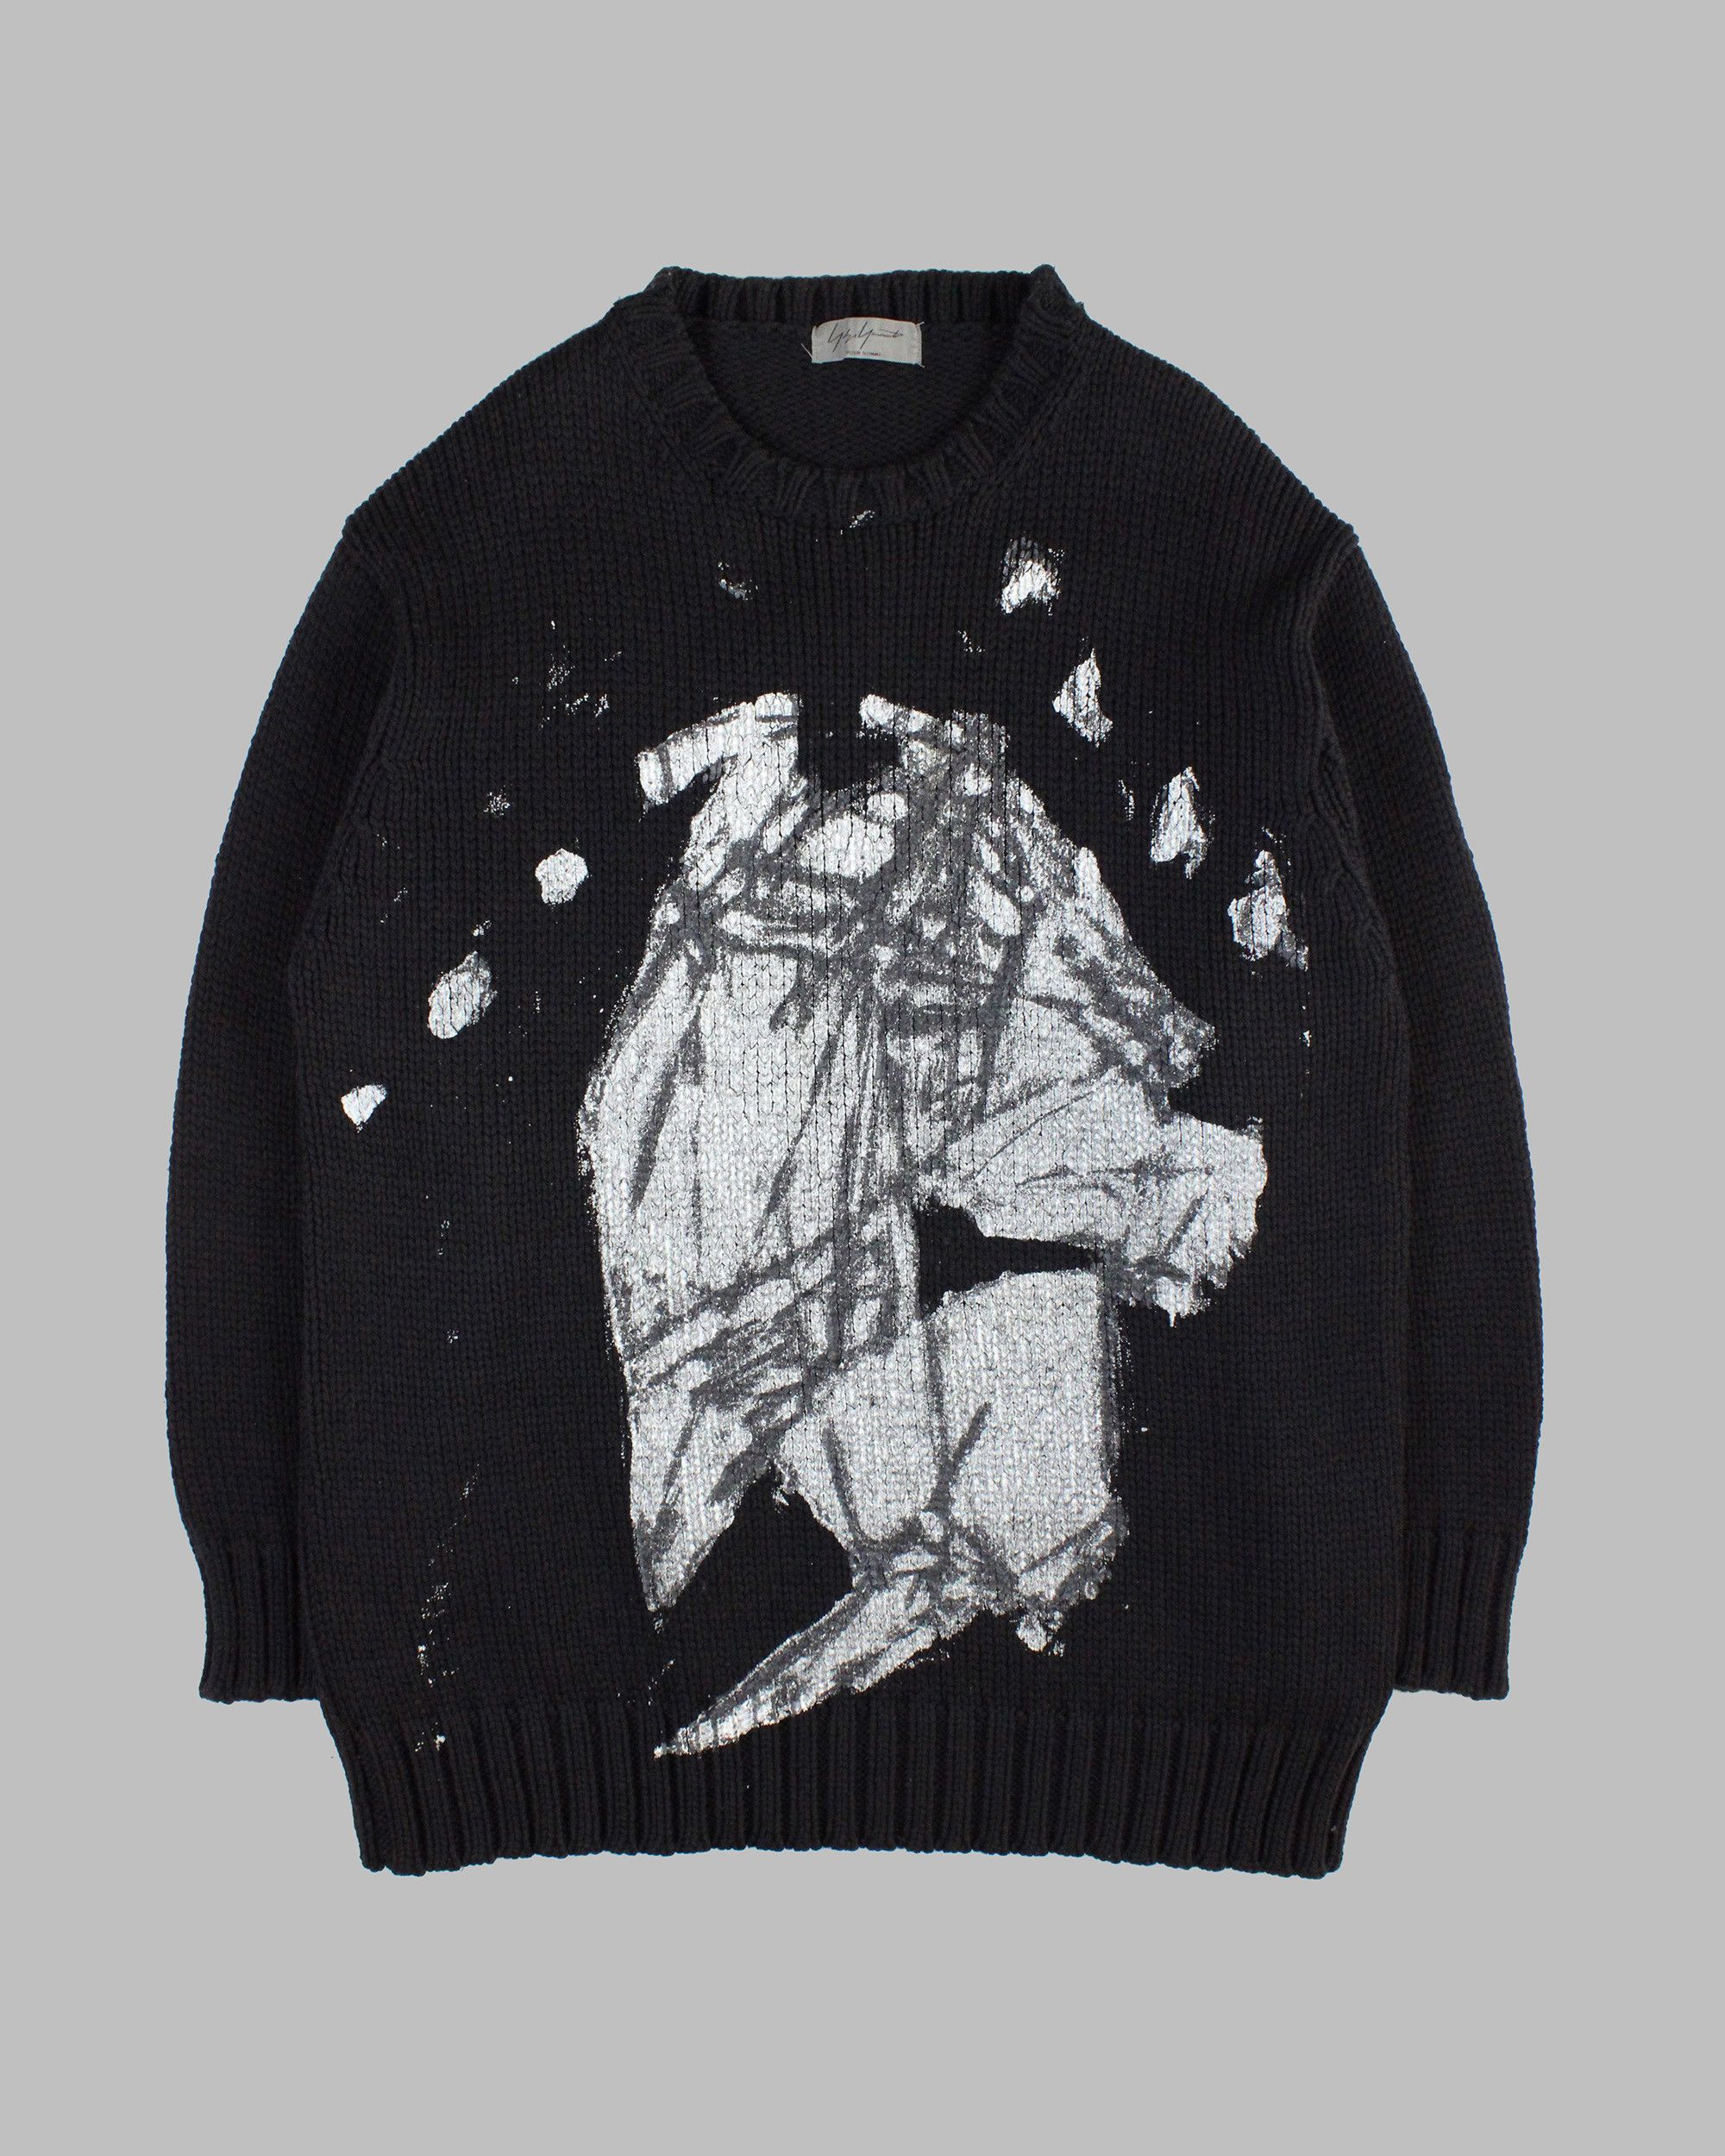 Yohji Yamamoto AW04 Hand-painted Oversized Sweater | Grailed